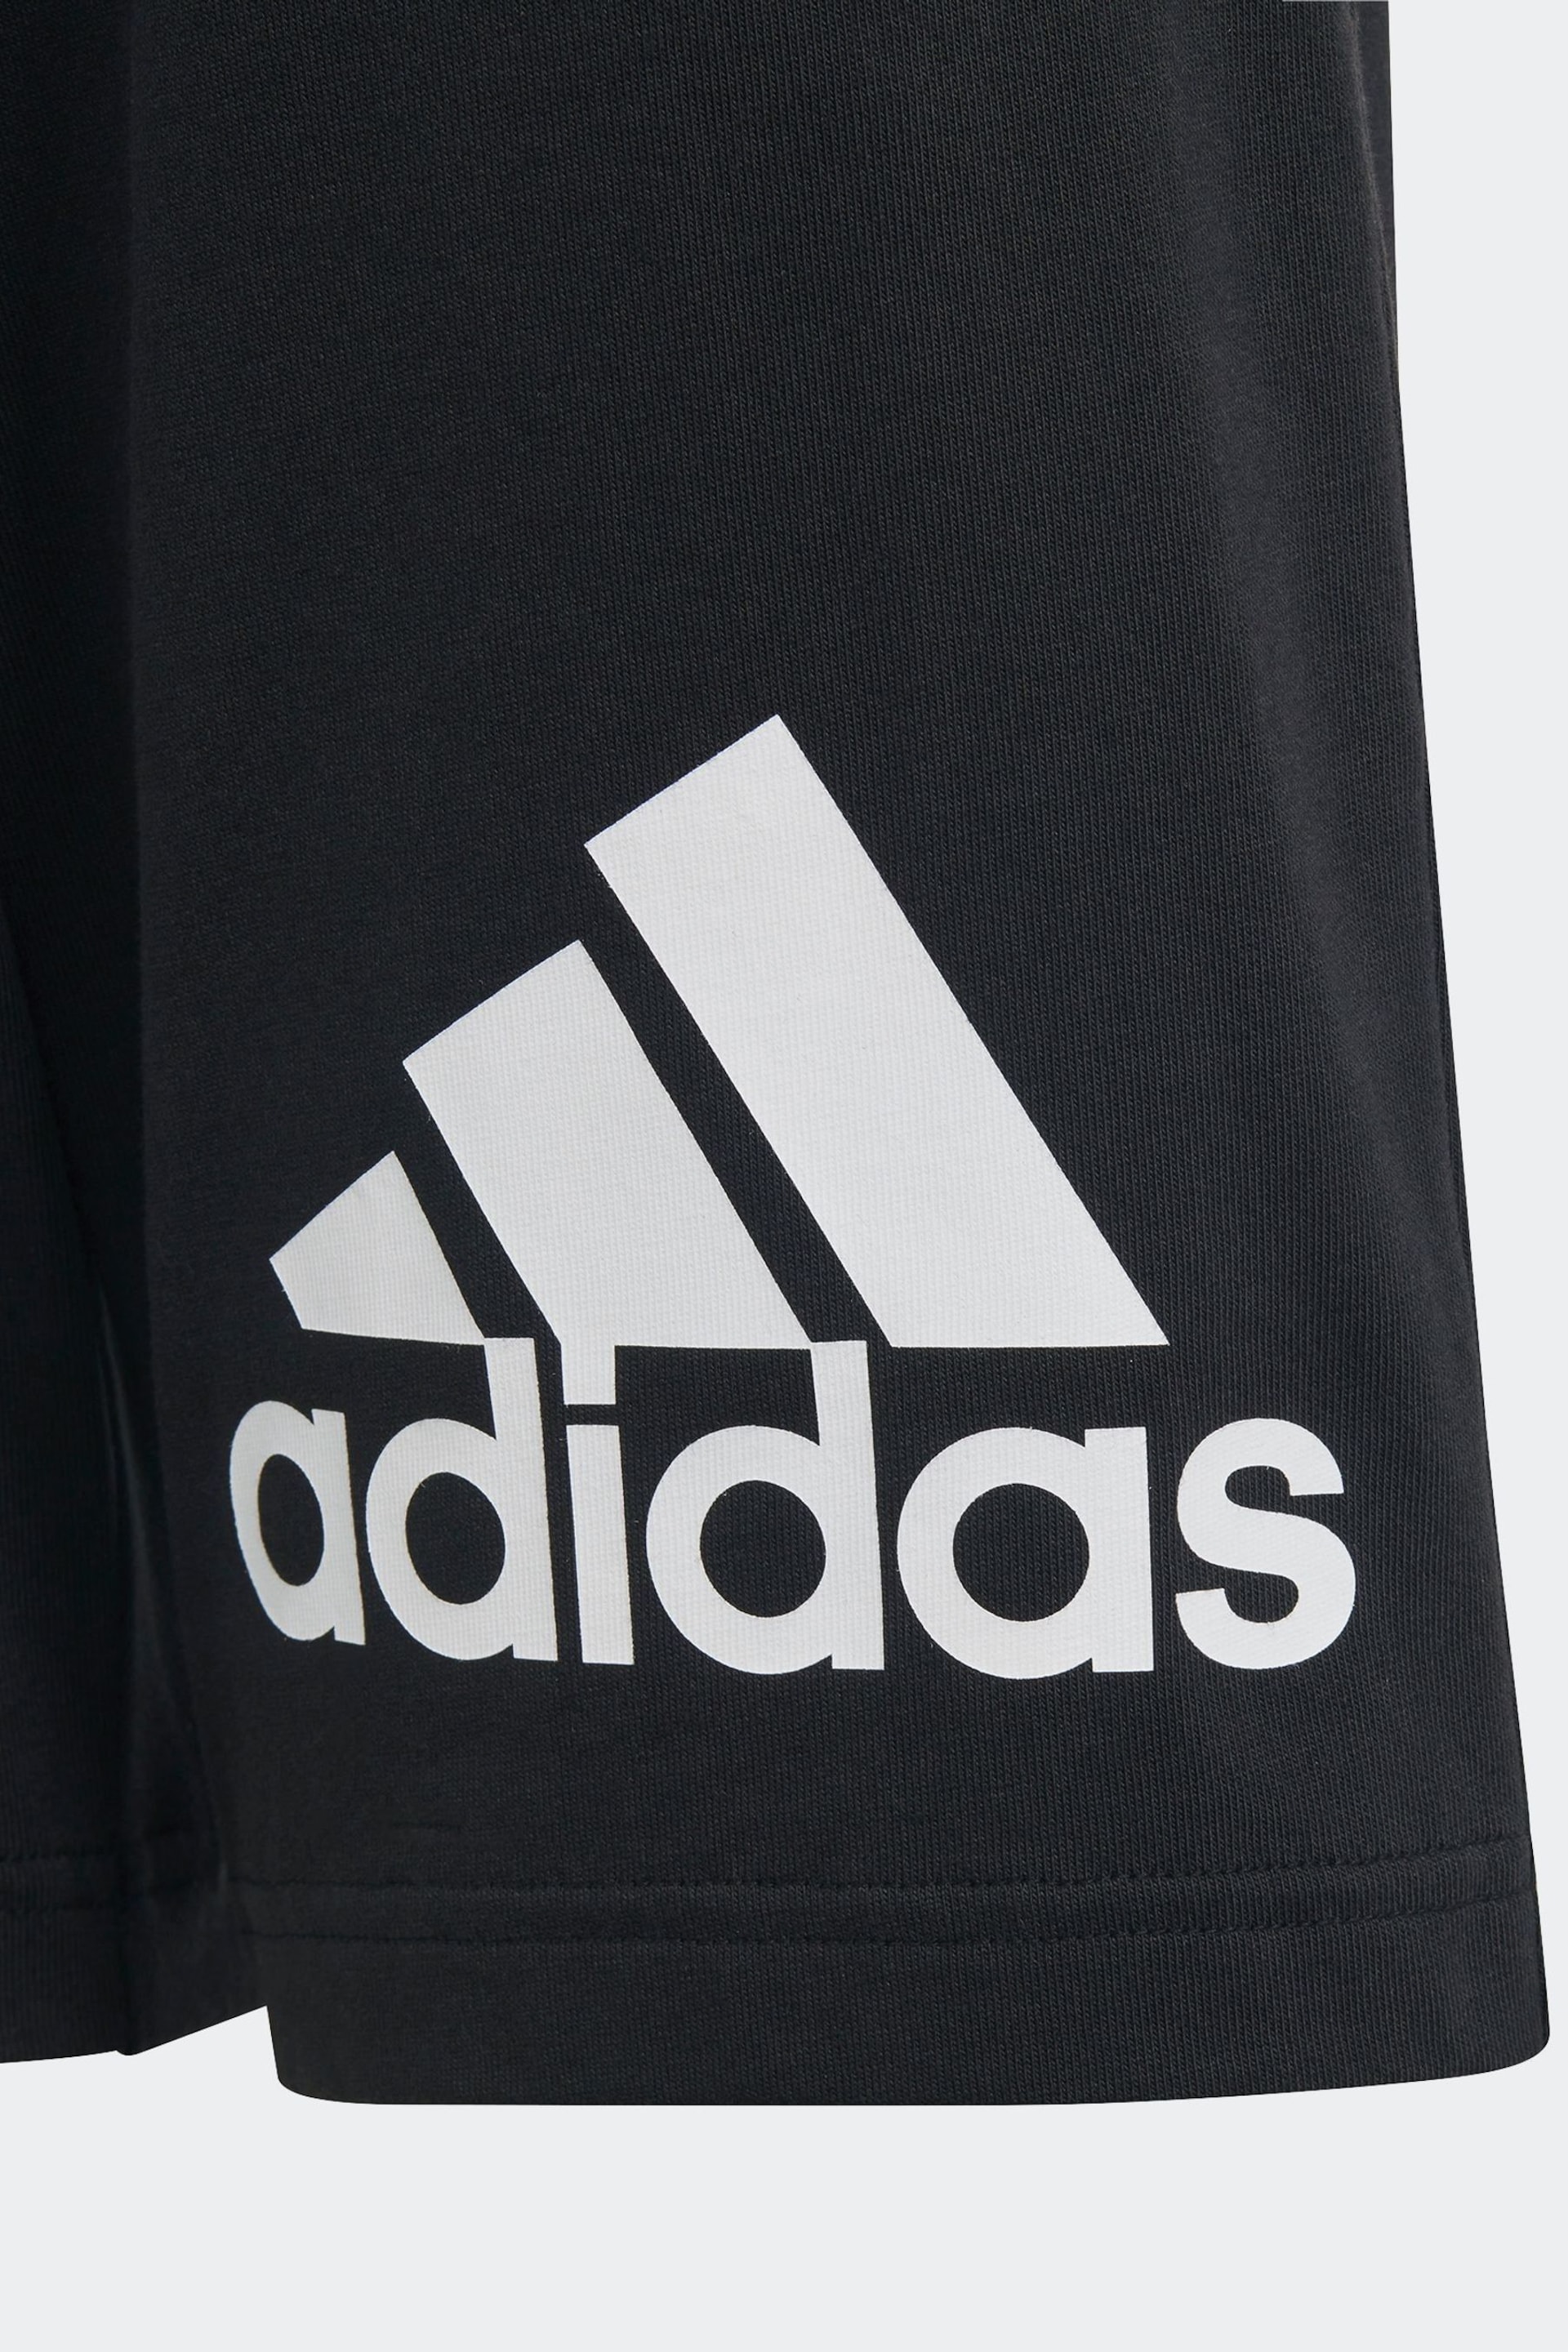 adidas Black Sportswear Essentials Big Logo Cotton Shorts - Image 4 of 5